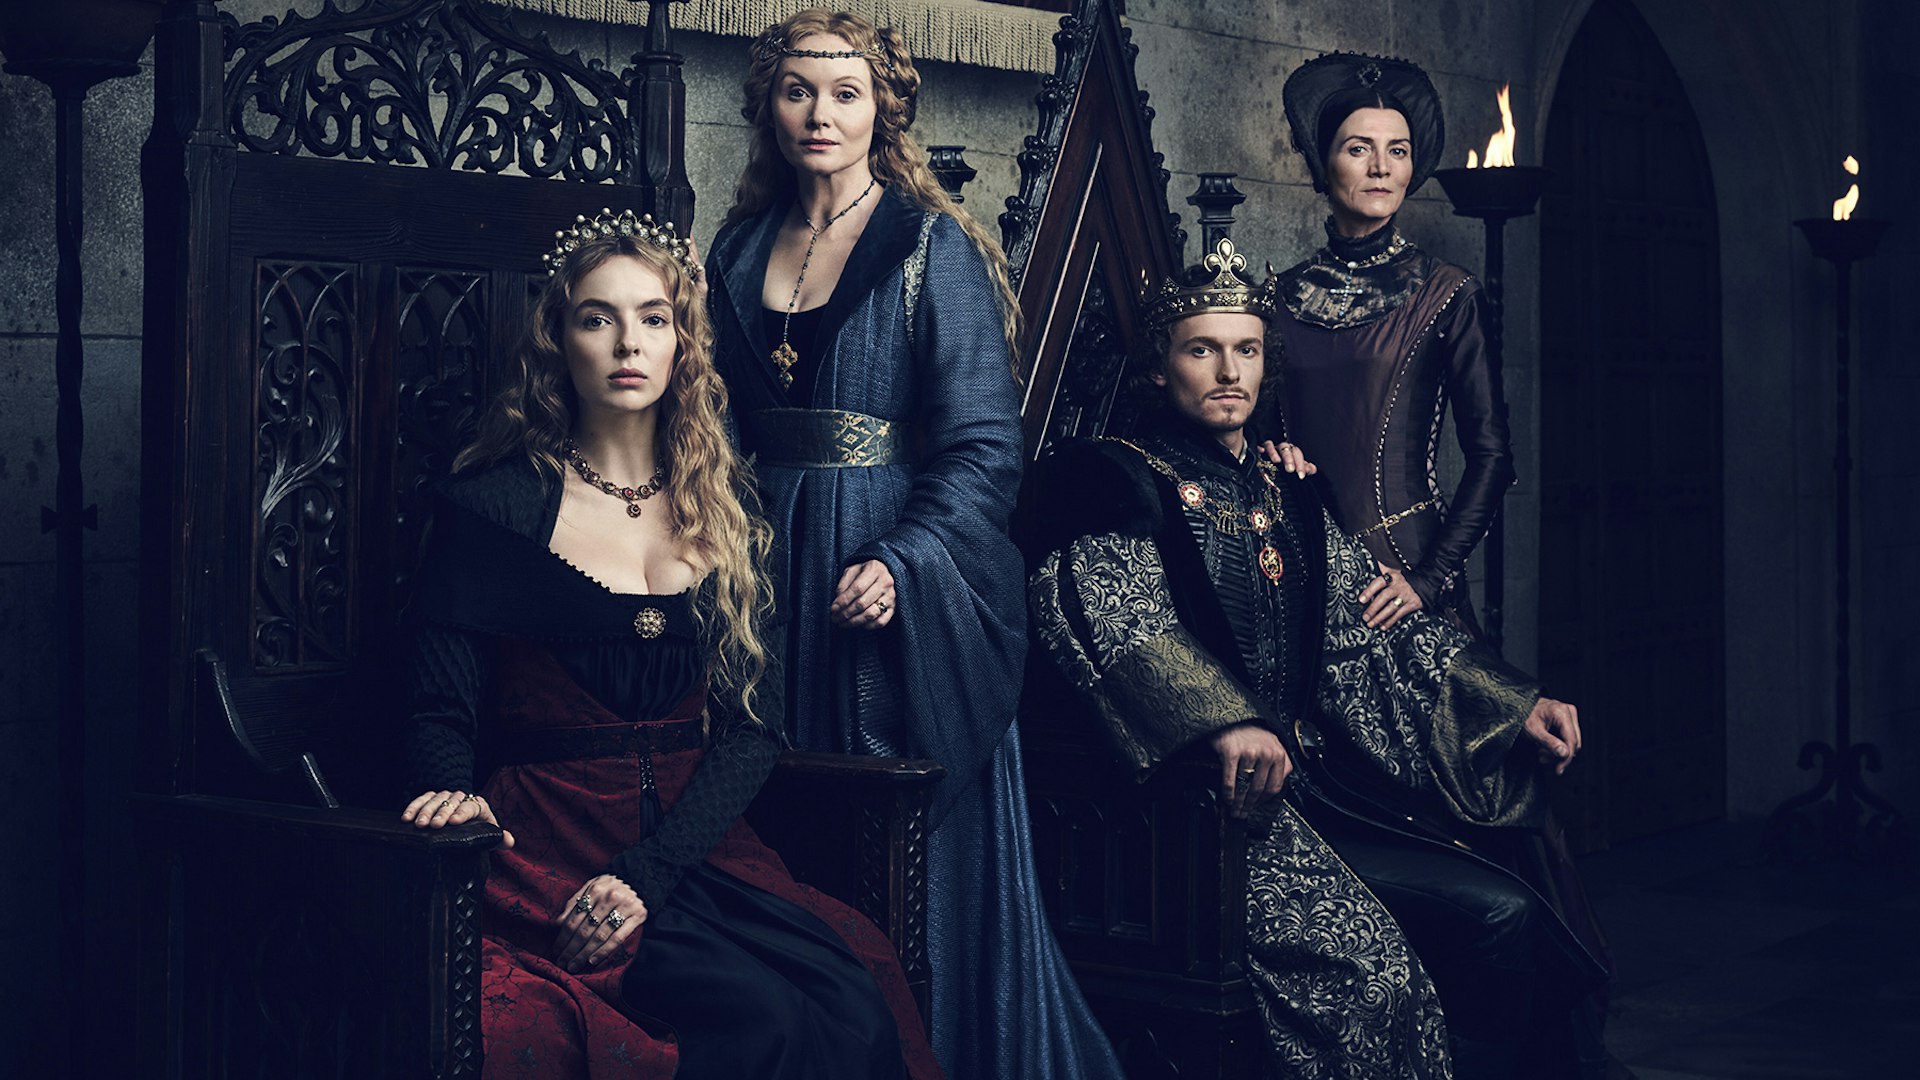 2 _ Jodie Comer (Elizabeth of York), Essie Davis (Dowager Queen Elizabeth), Jacob Collins-Levy (King Henry VII), Michelle Fairley (Lady Margaret Beaufort) copy